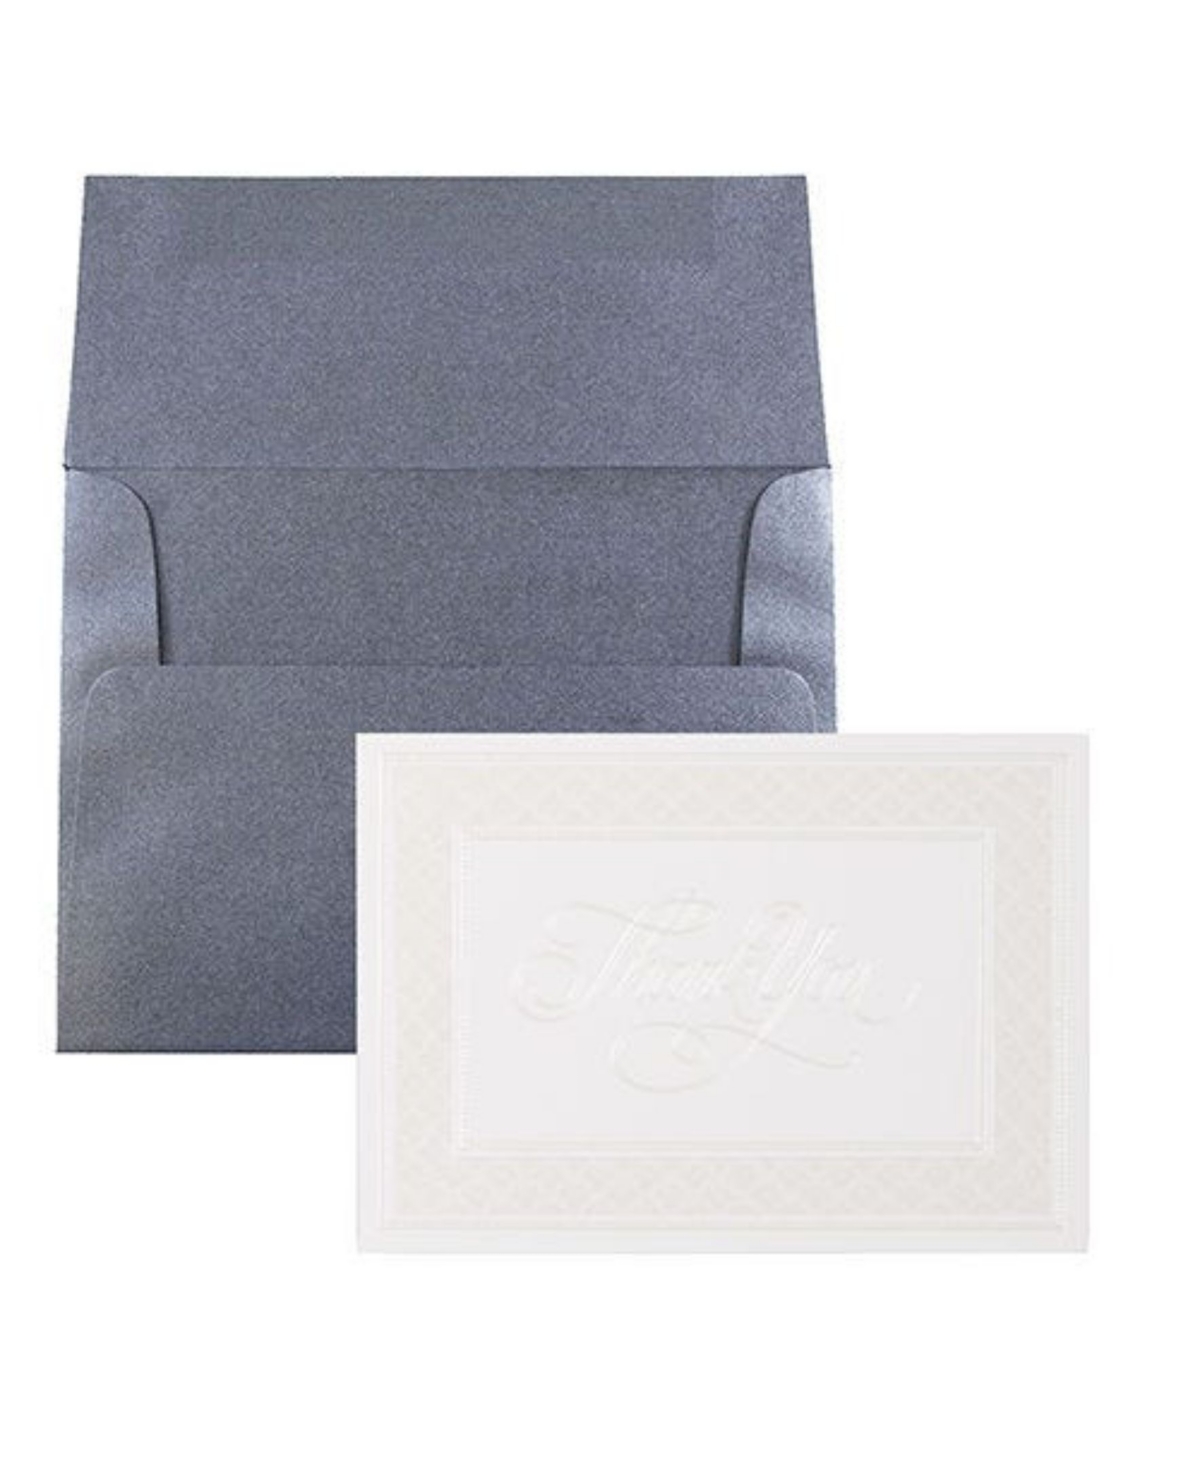 Jam Paper Thank You Card Sets In Border Cards Anthracite Envelopes